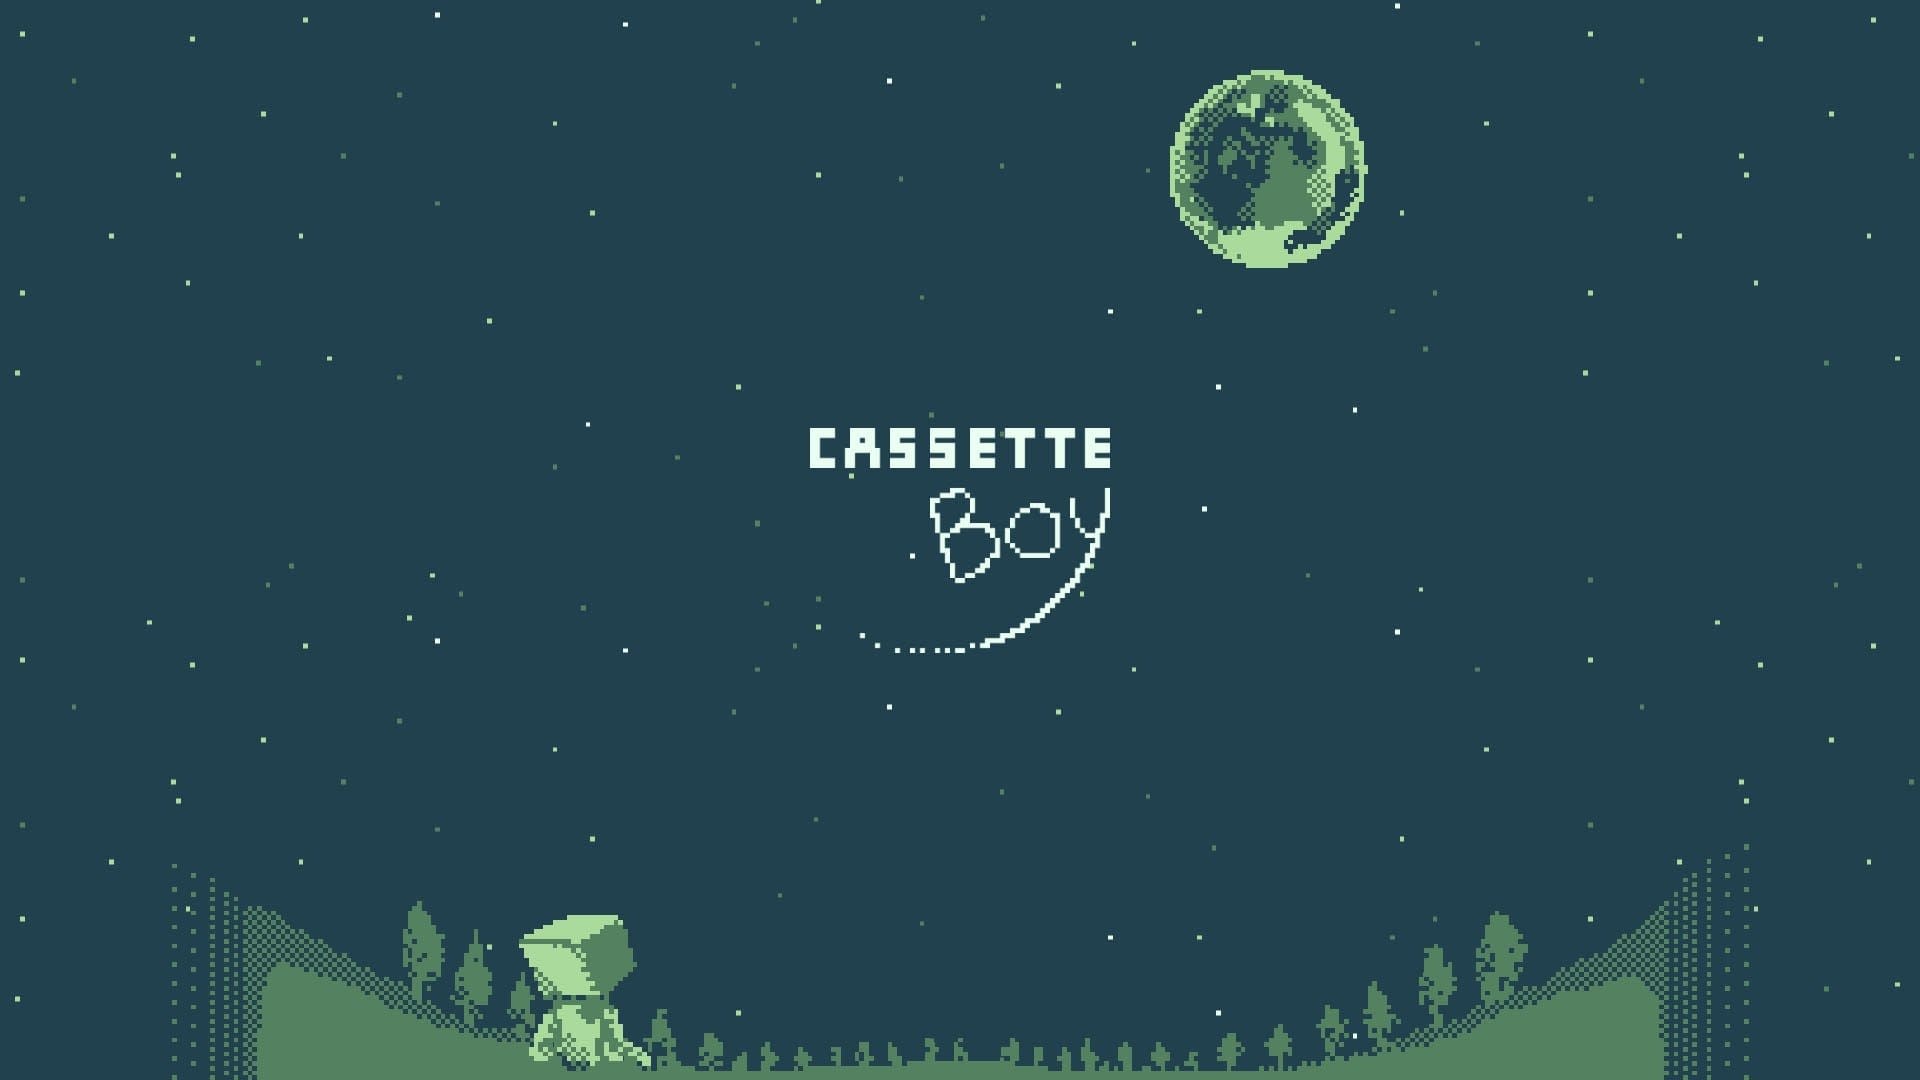 Pixel graphics action adventure game Cassette Boy announced